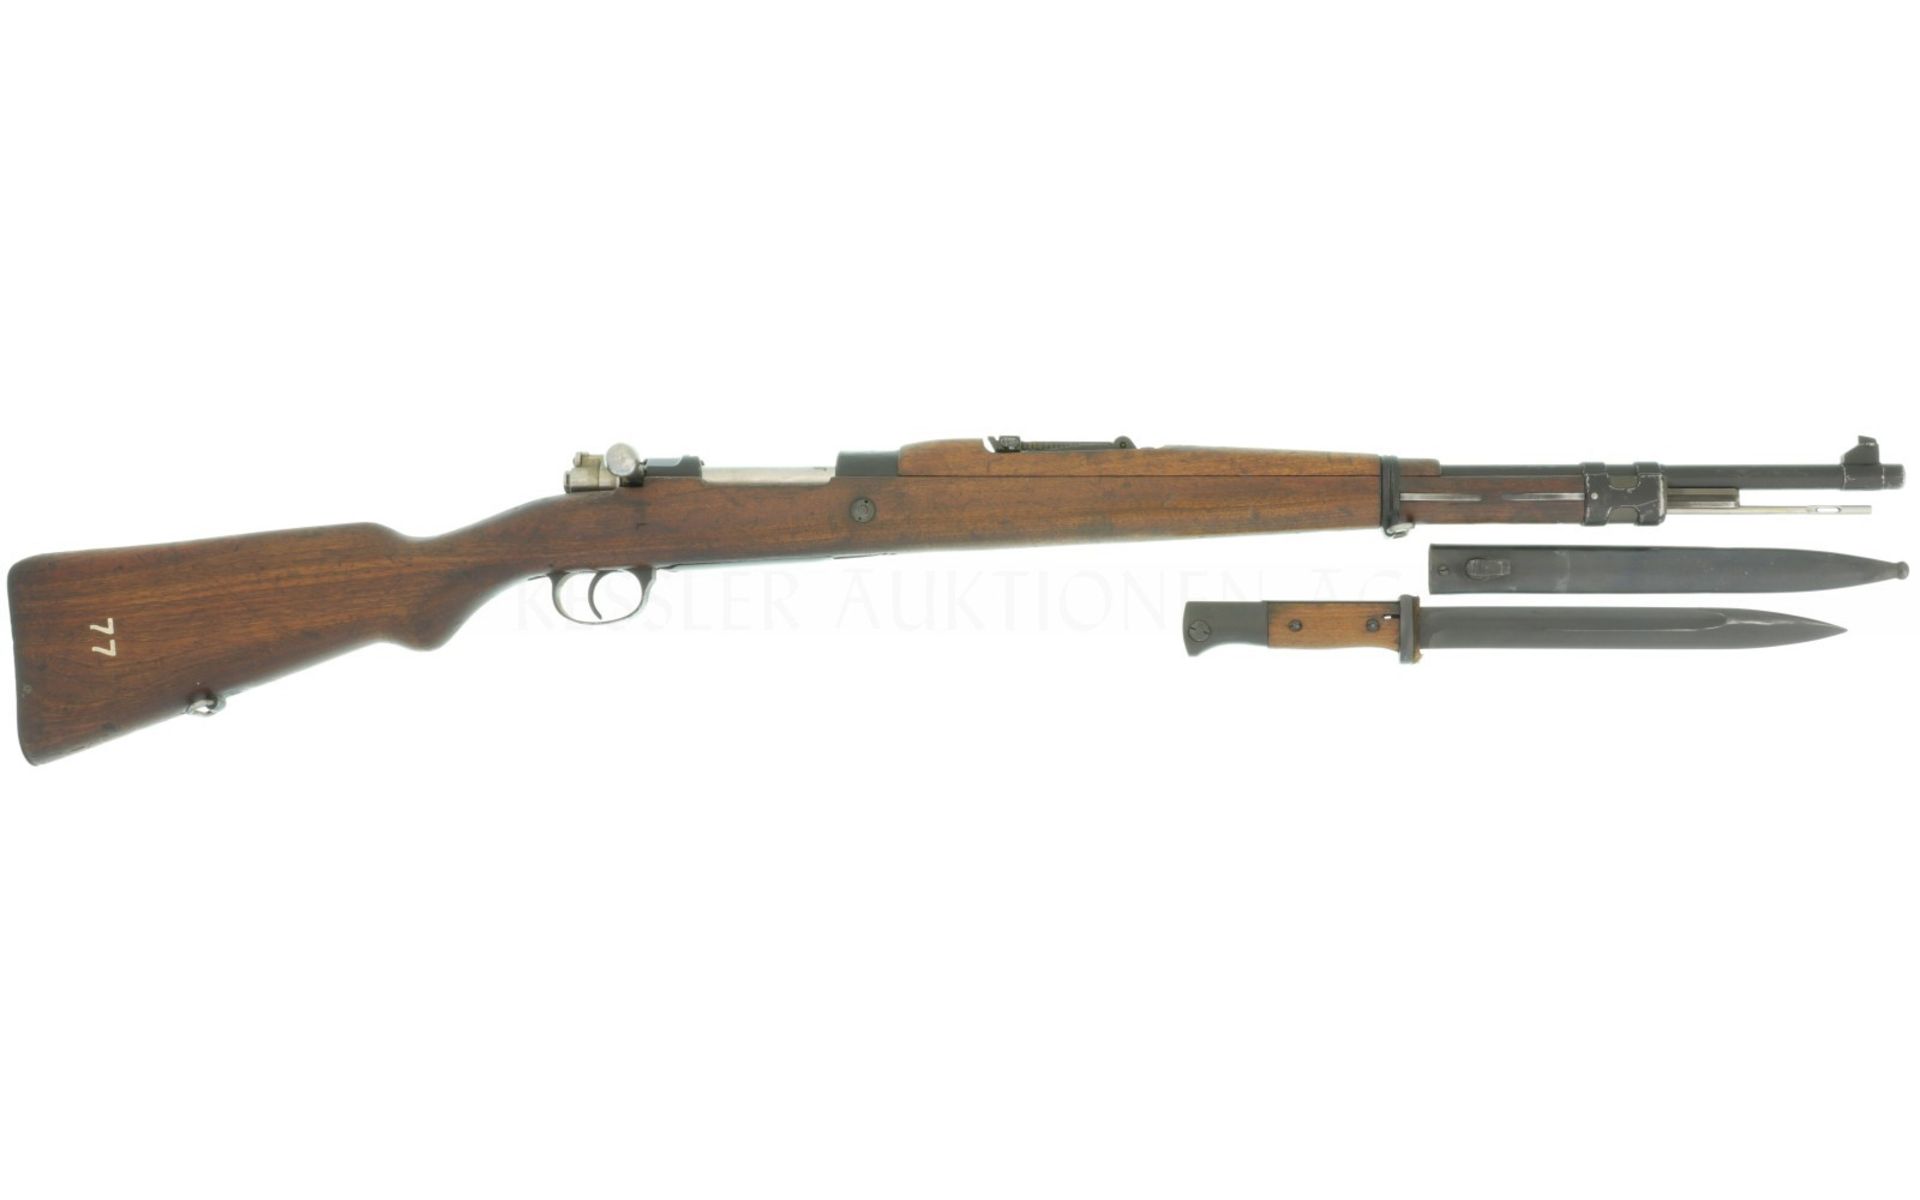 Repetierbüchse, FN Mauser Mod. 35, Kal. .30-06